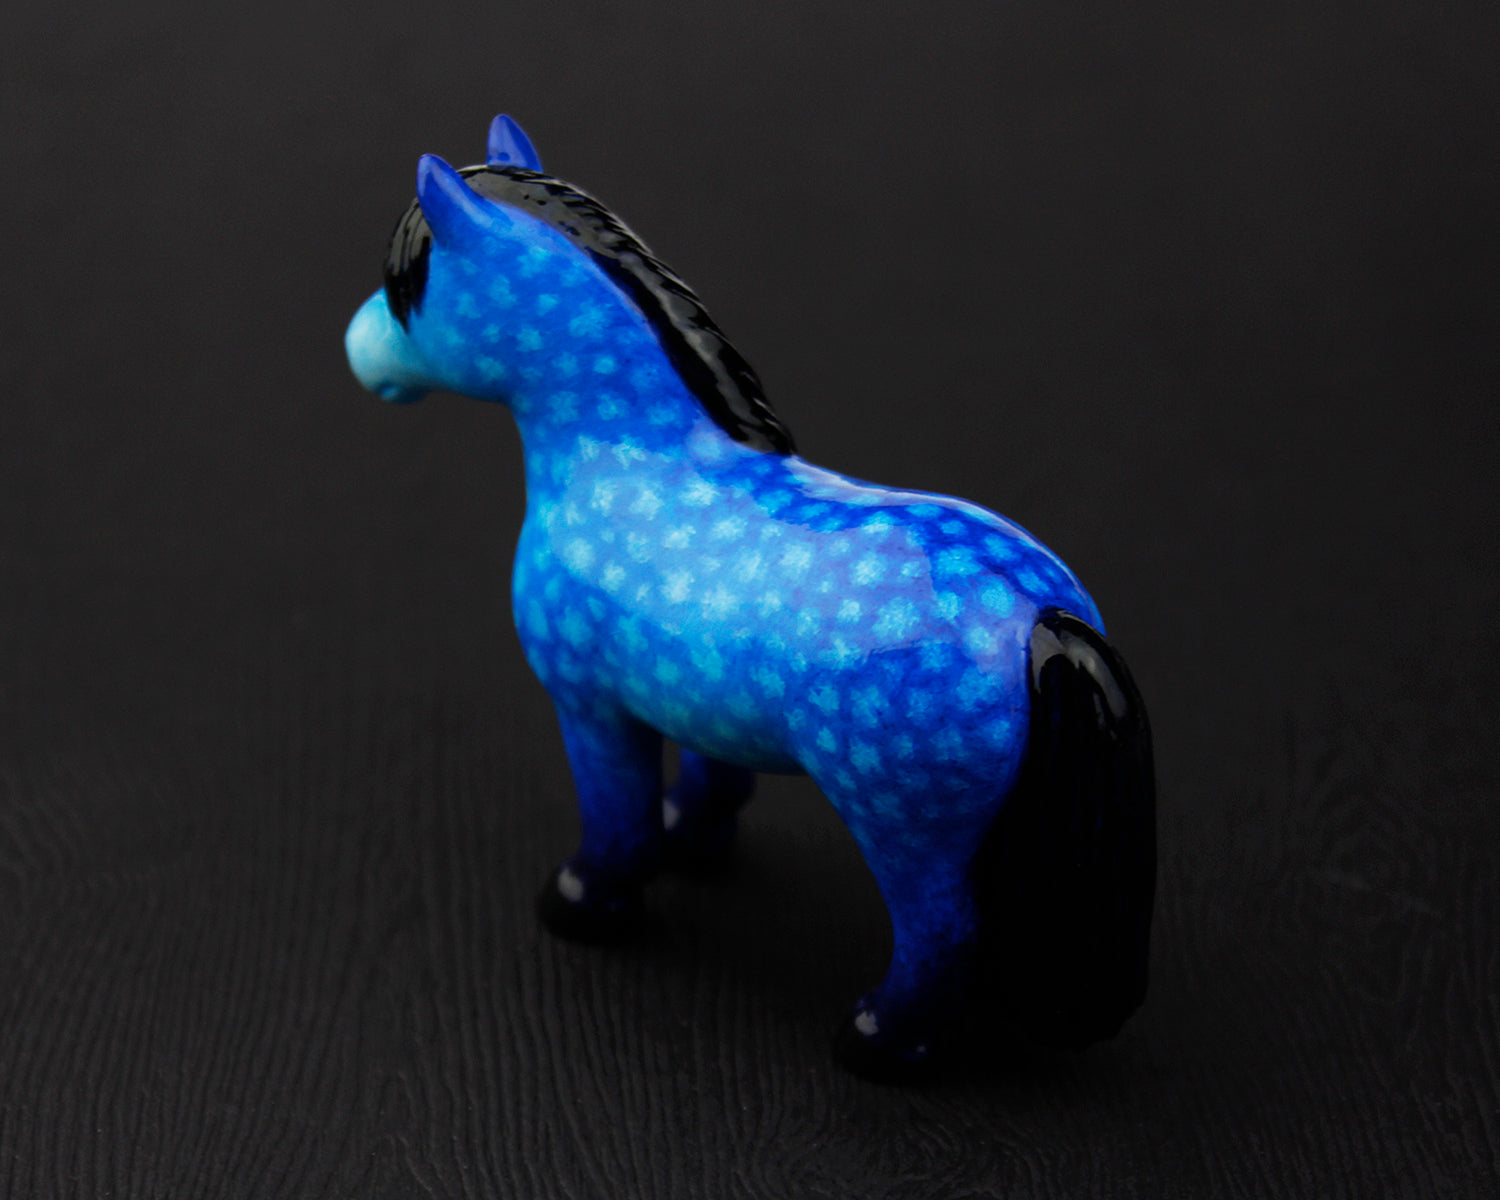 Dapple blue pony